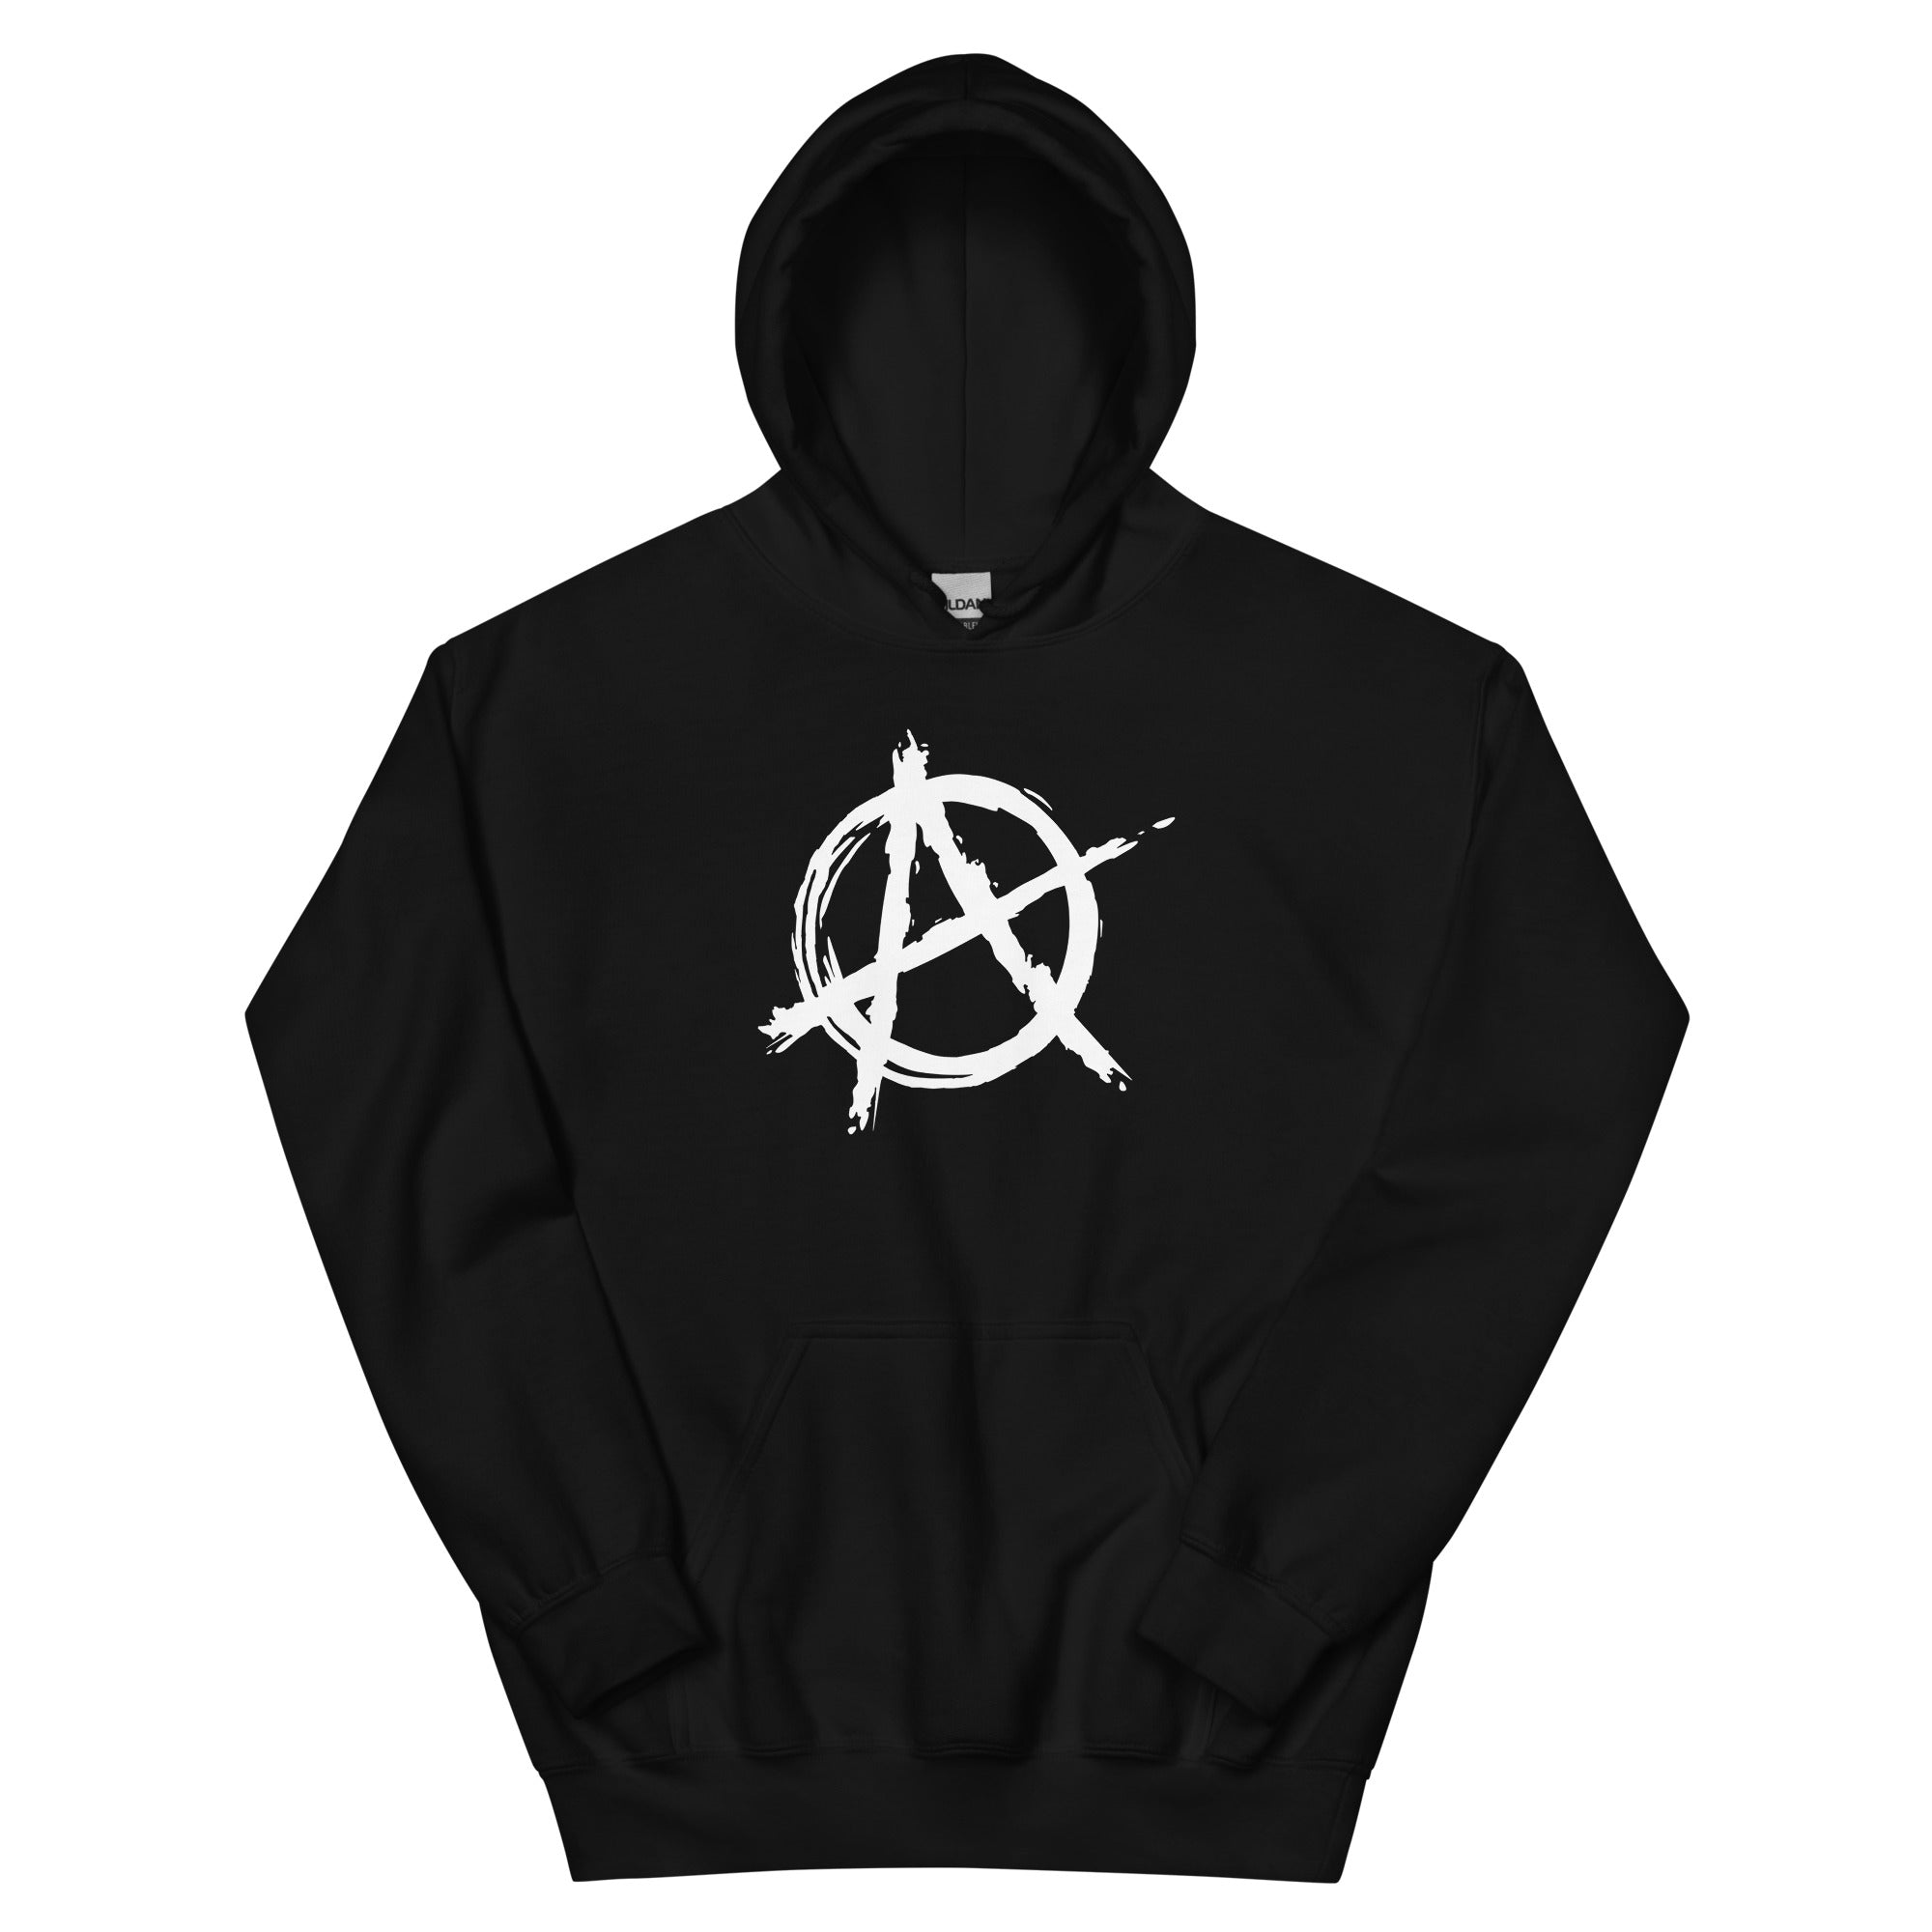 White Anarchy is Order Symbol Punk Rock Unisex Hoodie Sweatshirt - Edge of Life Designs